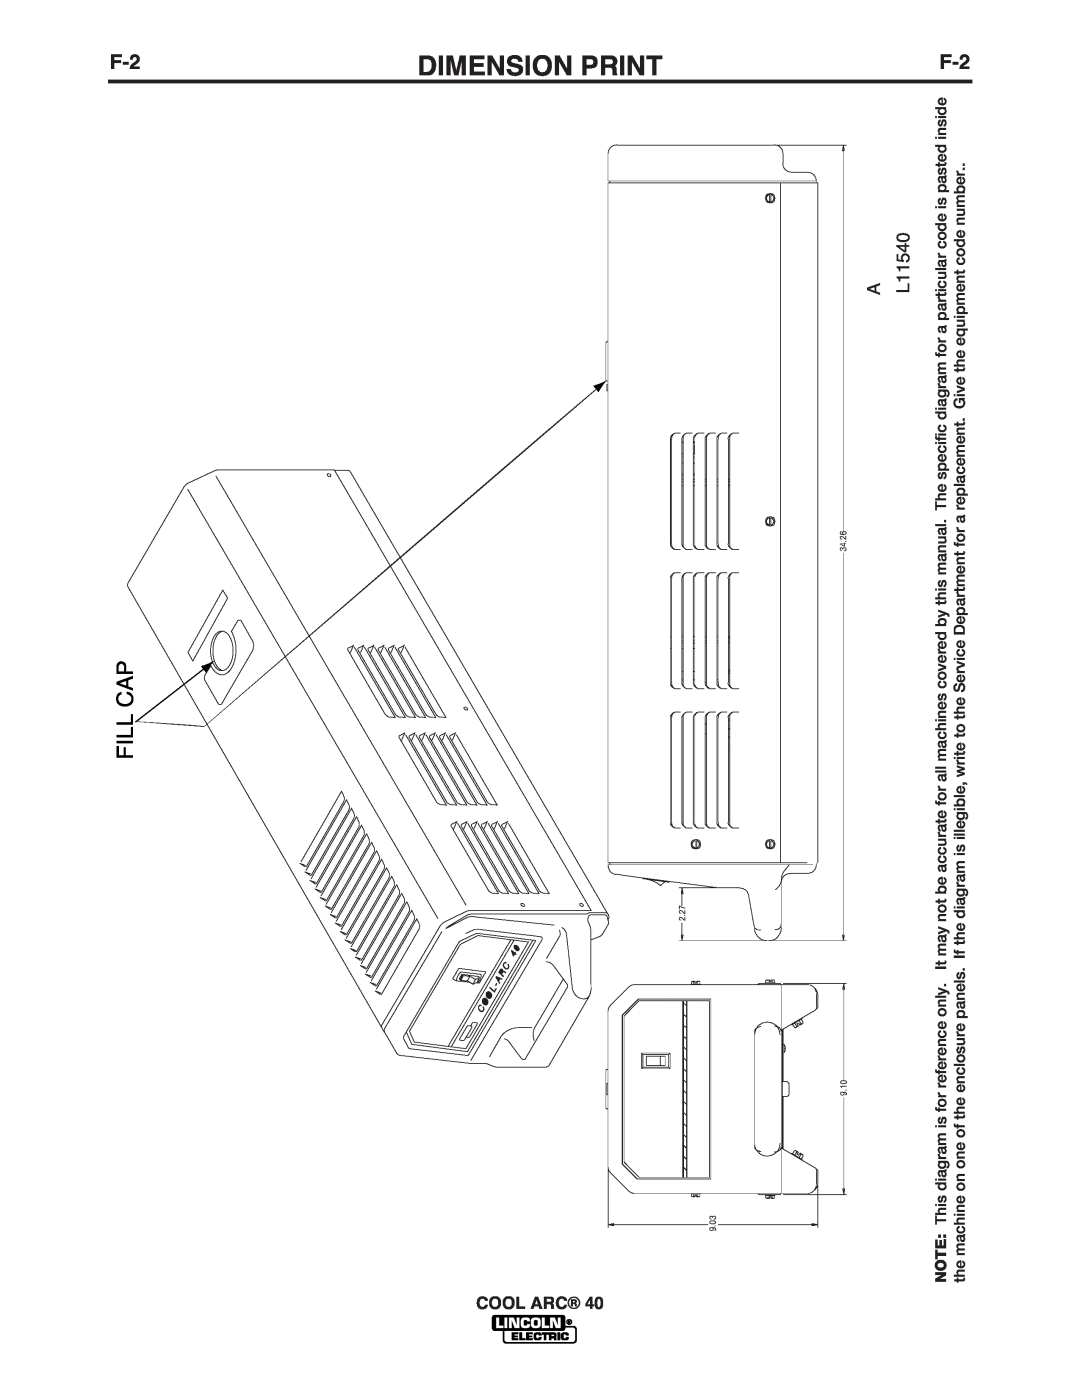 Lincoln Electric IM670-A manual Dimension Print, Fill Cap, A L11540, Cool Arc, 9.03, 9.10, 2.27 34.26 